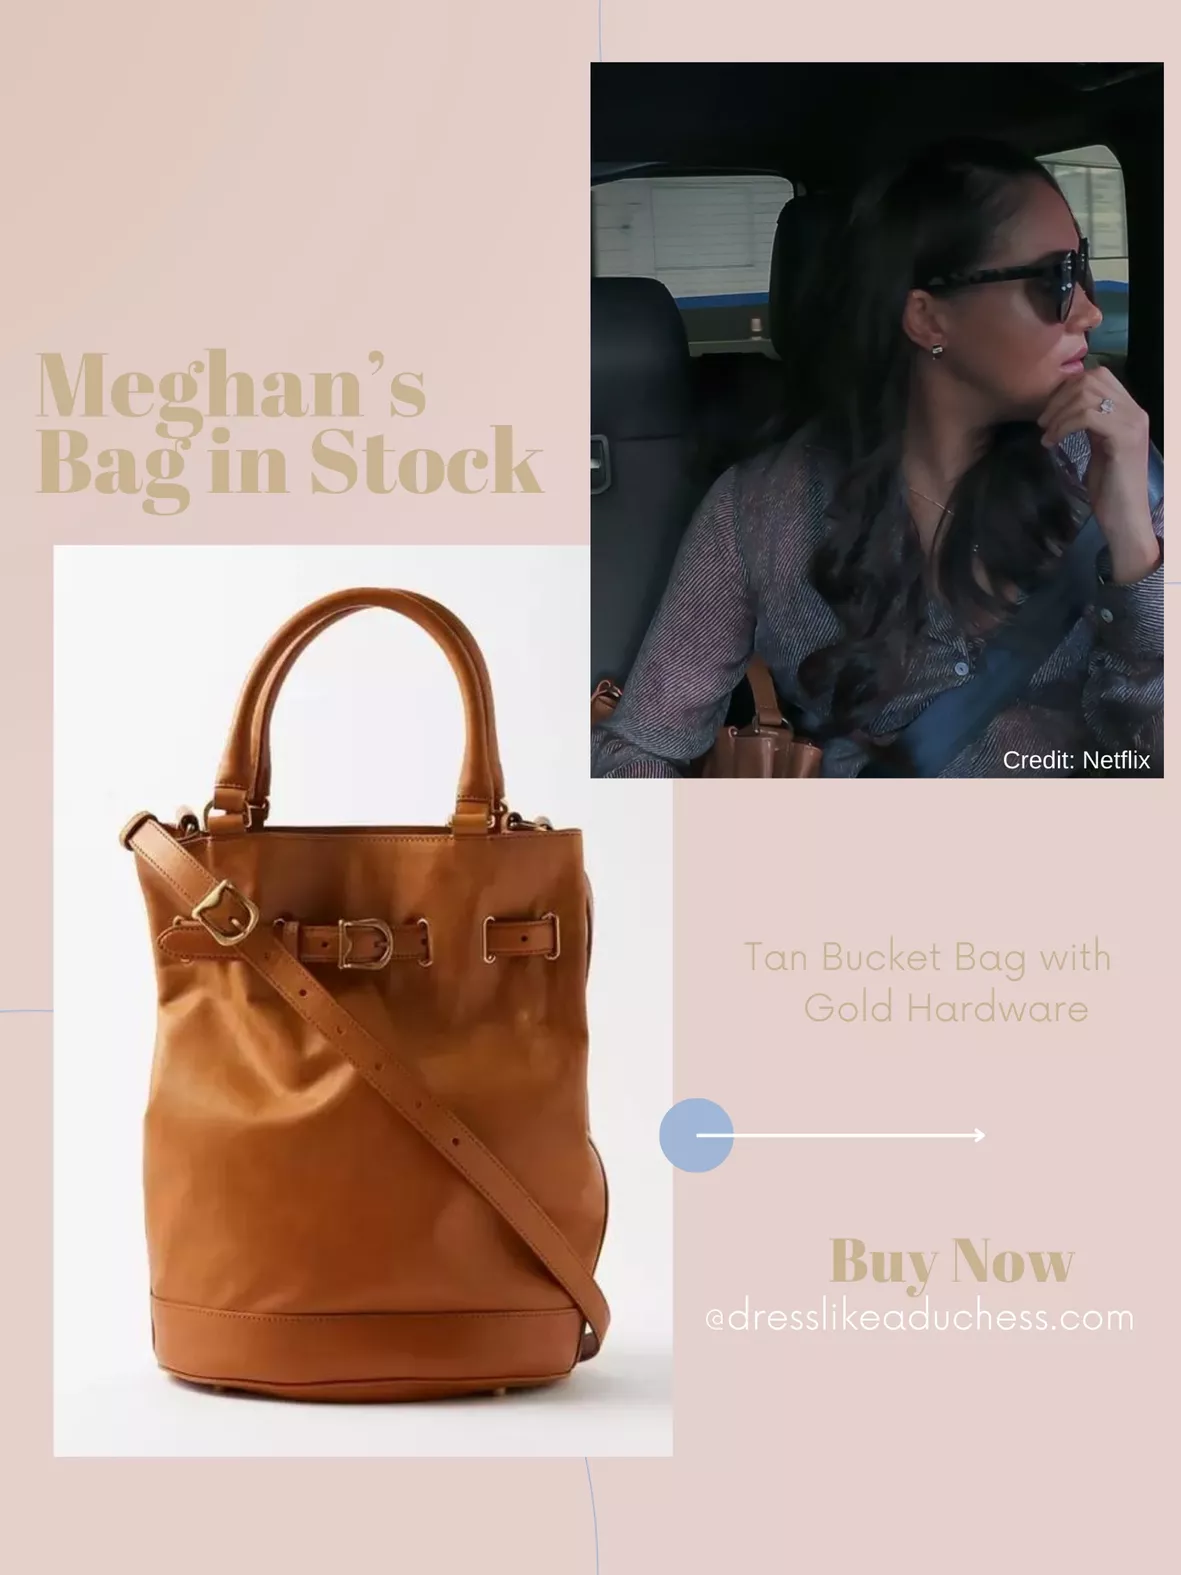 Celine Medium Cabas Tote Bag In Triomphe Canvas - Meghan Markle's Handbags  - Meghan's Fashion